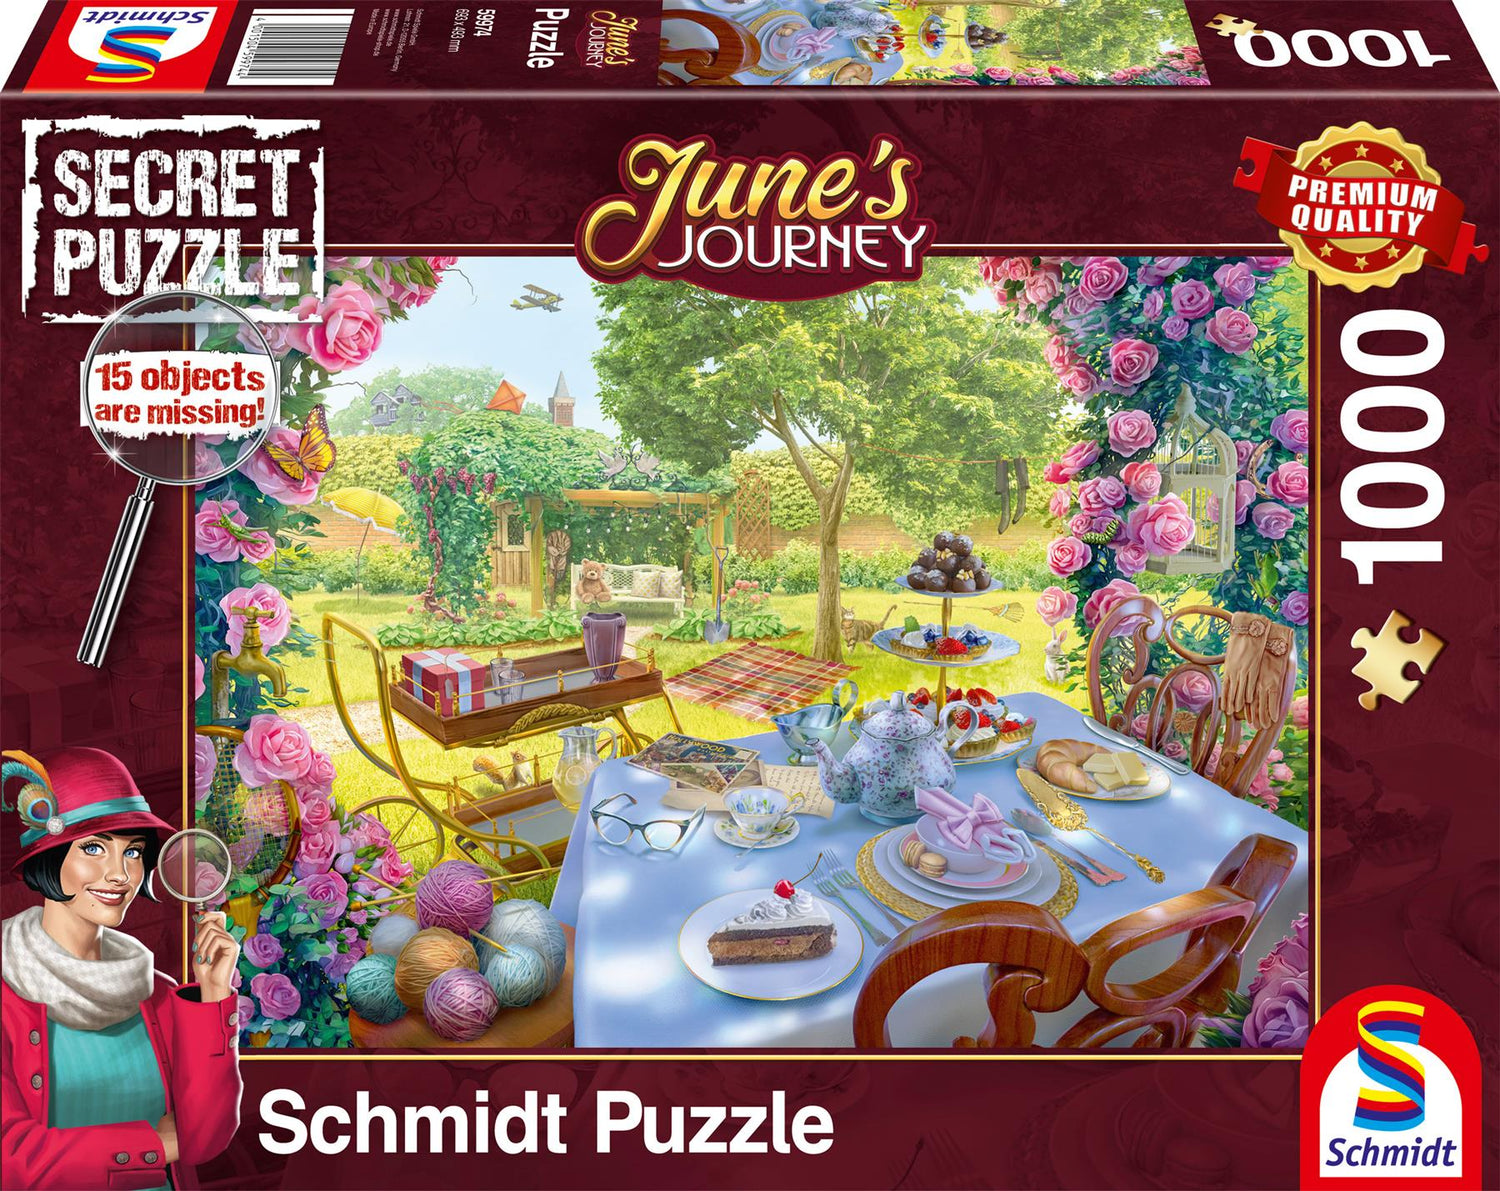 Schmidt Jigsaw Puzzles